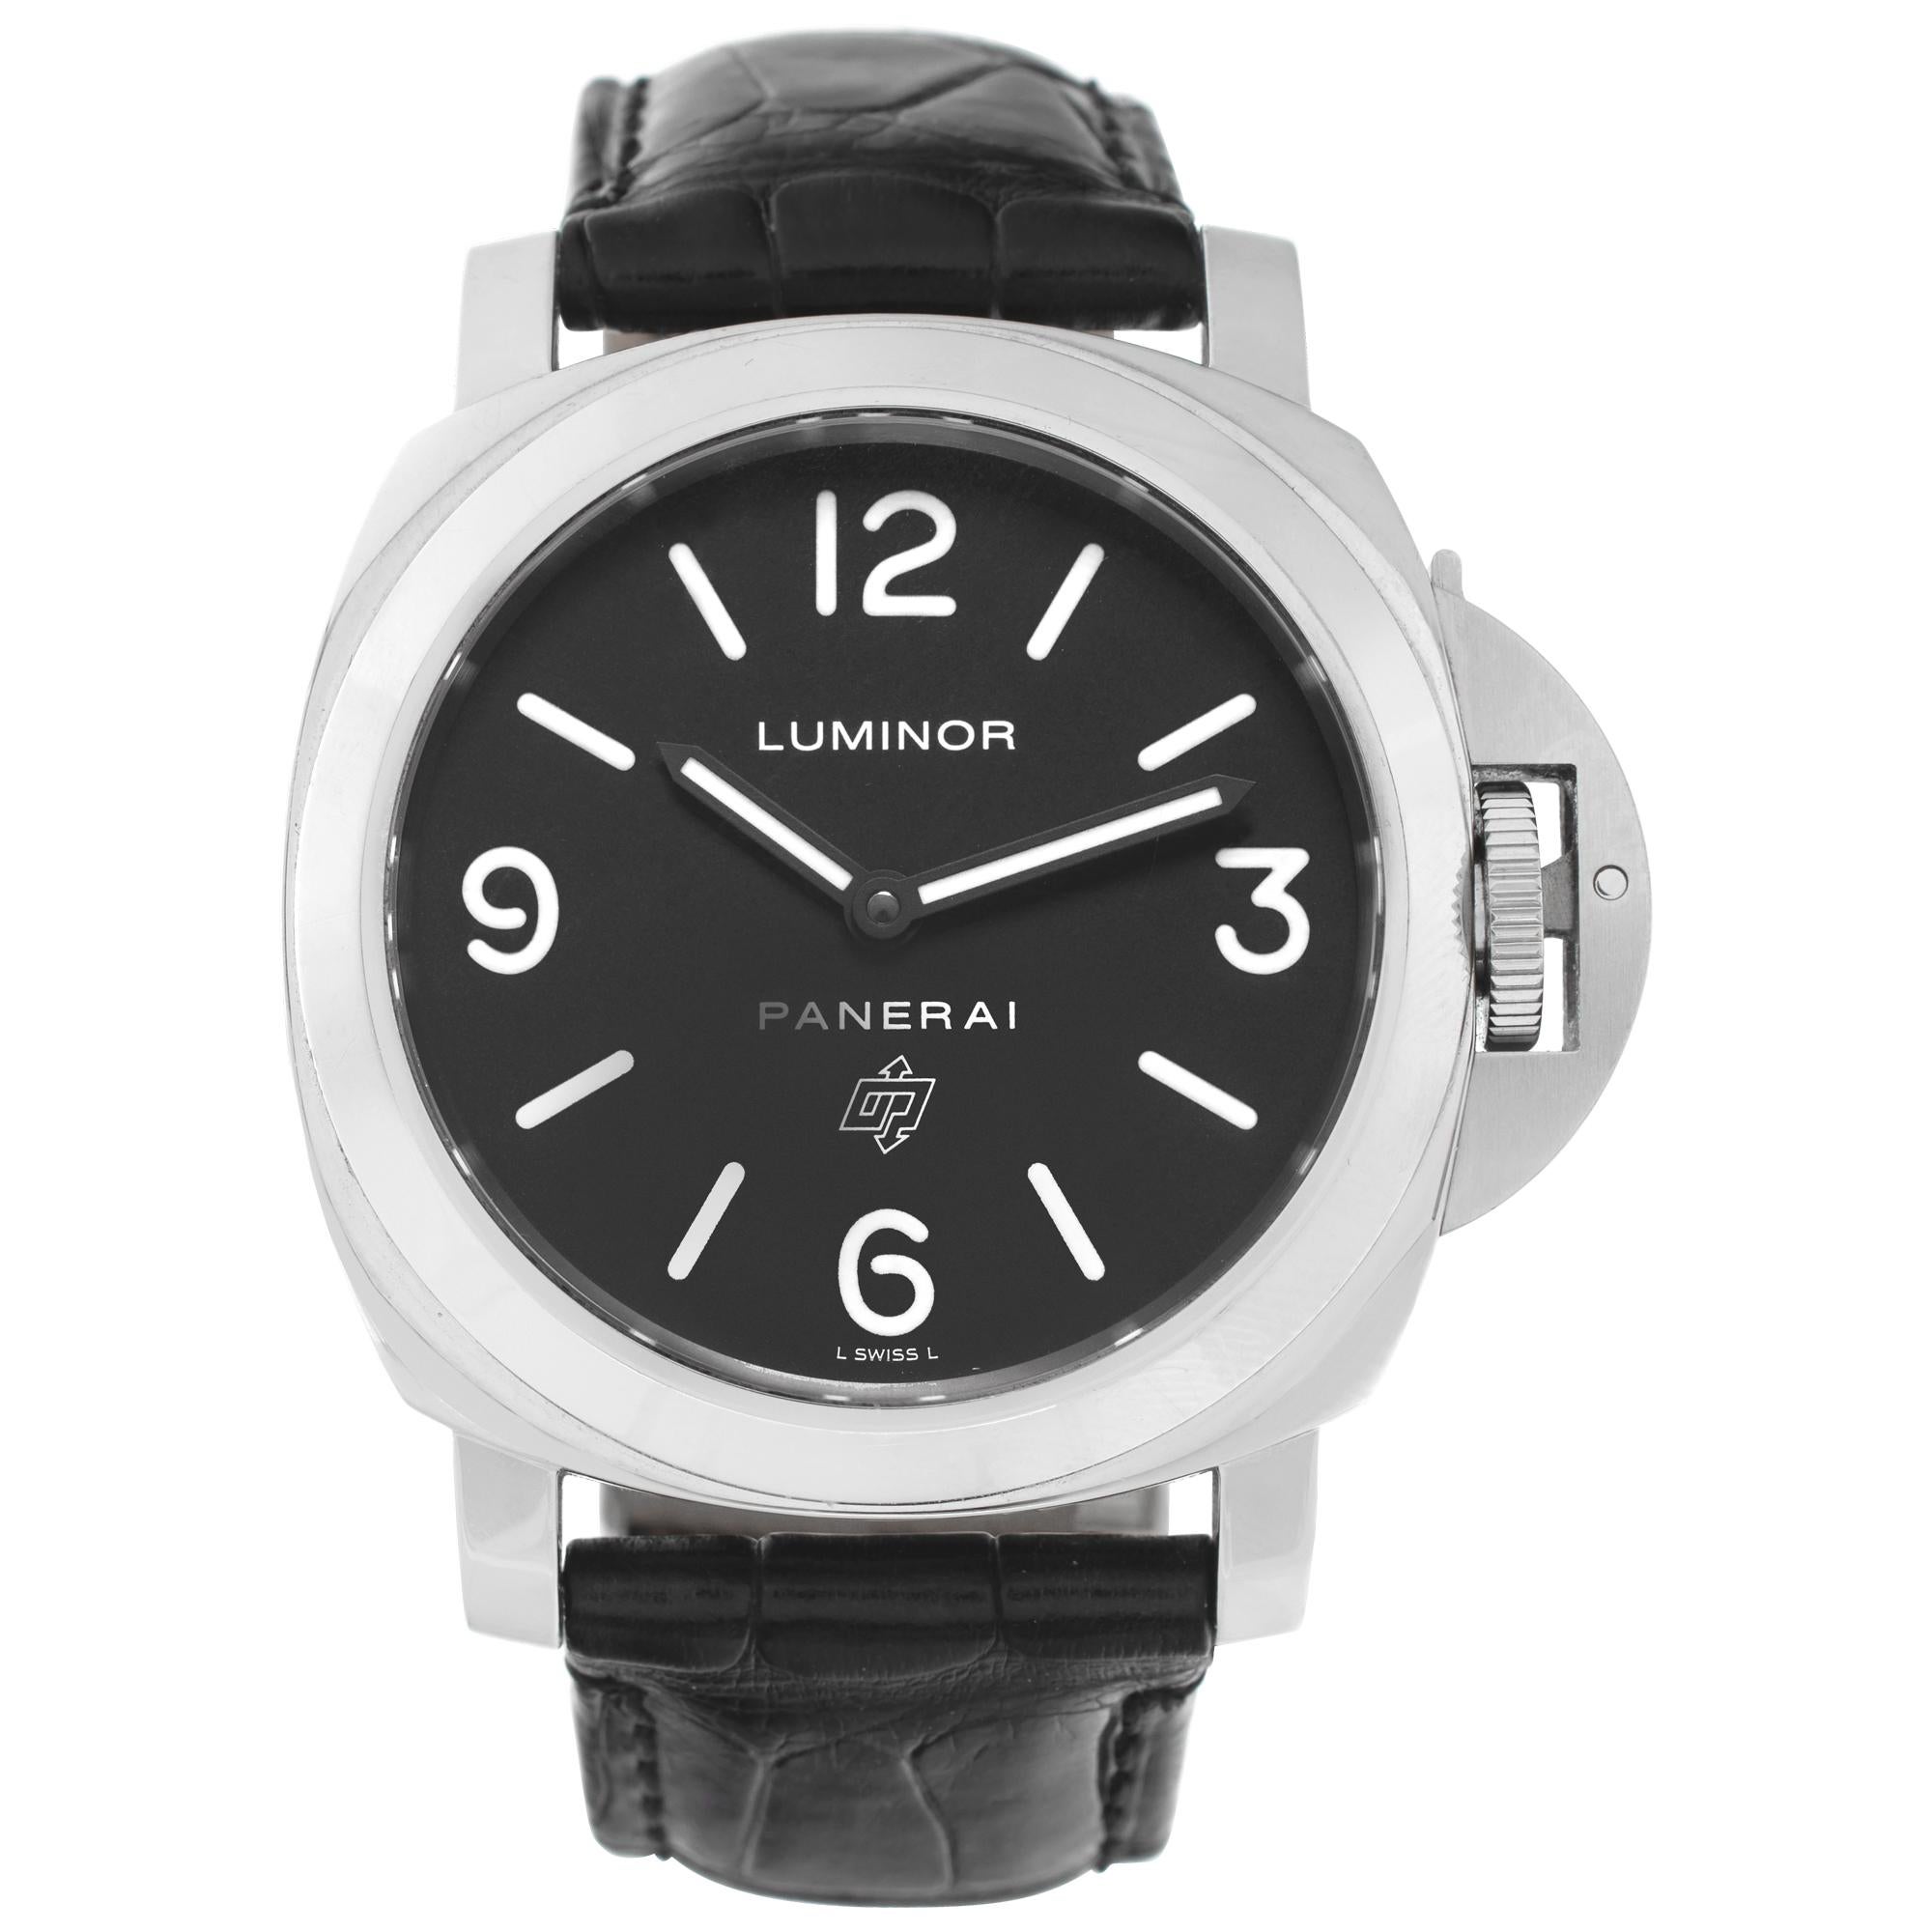 Panerai Luminor stainless steel Manual Wristwatch PAM000 For Sale